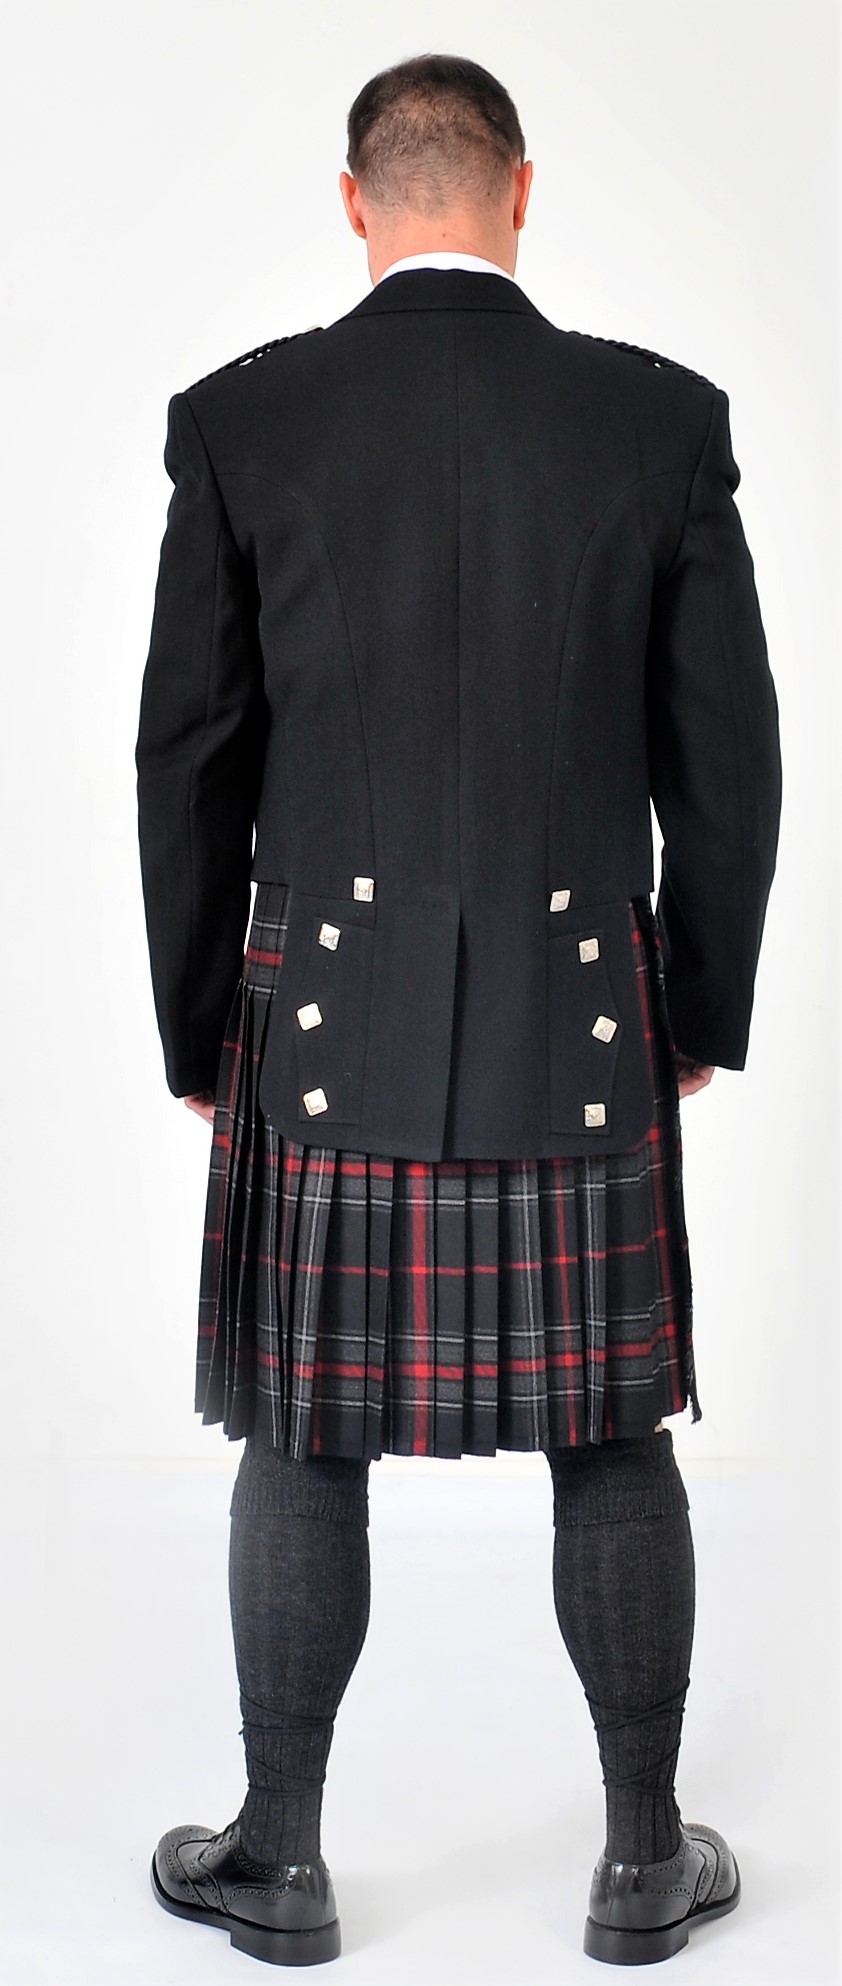 Adult Ex Hire Black Prince Charlie Jacket & Vest Scottish Made A1 condition 